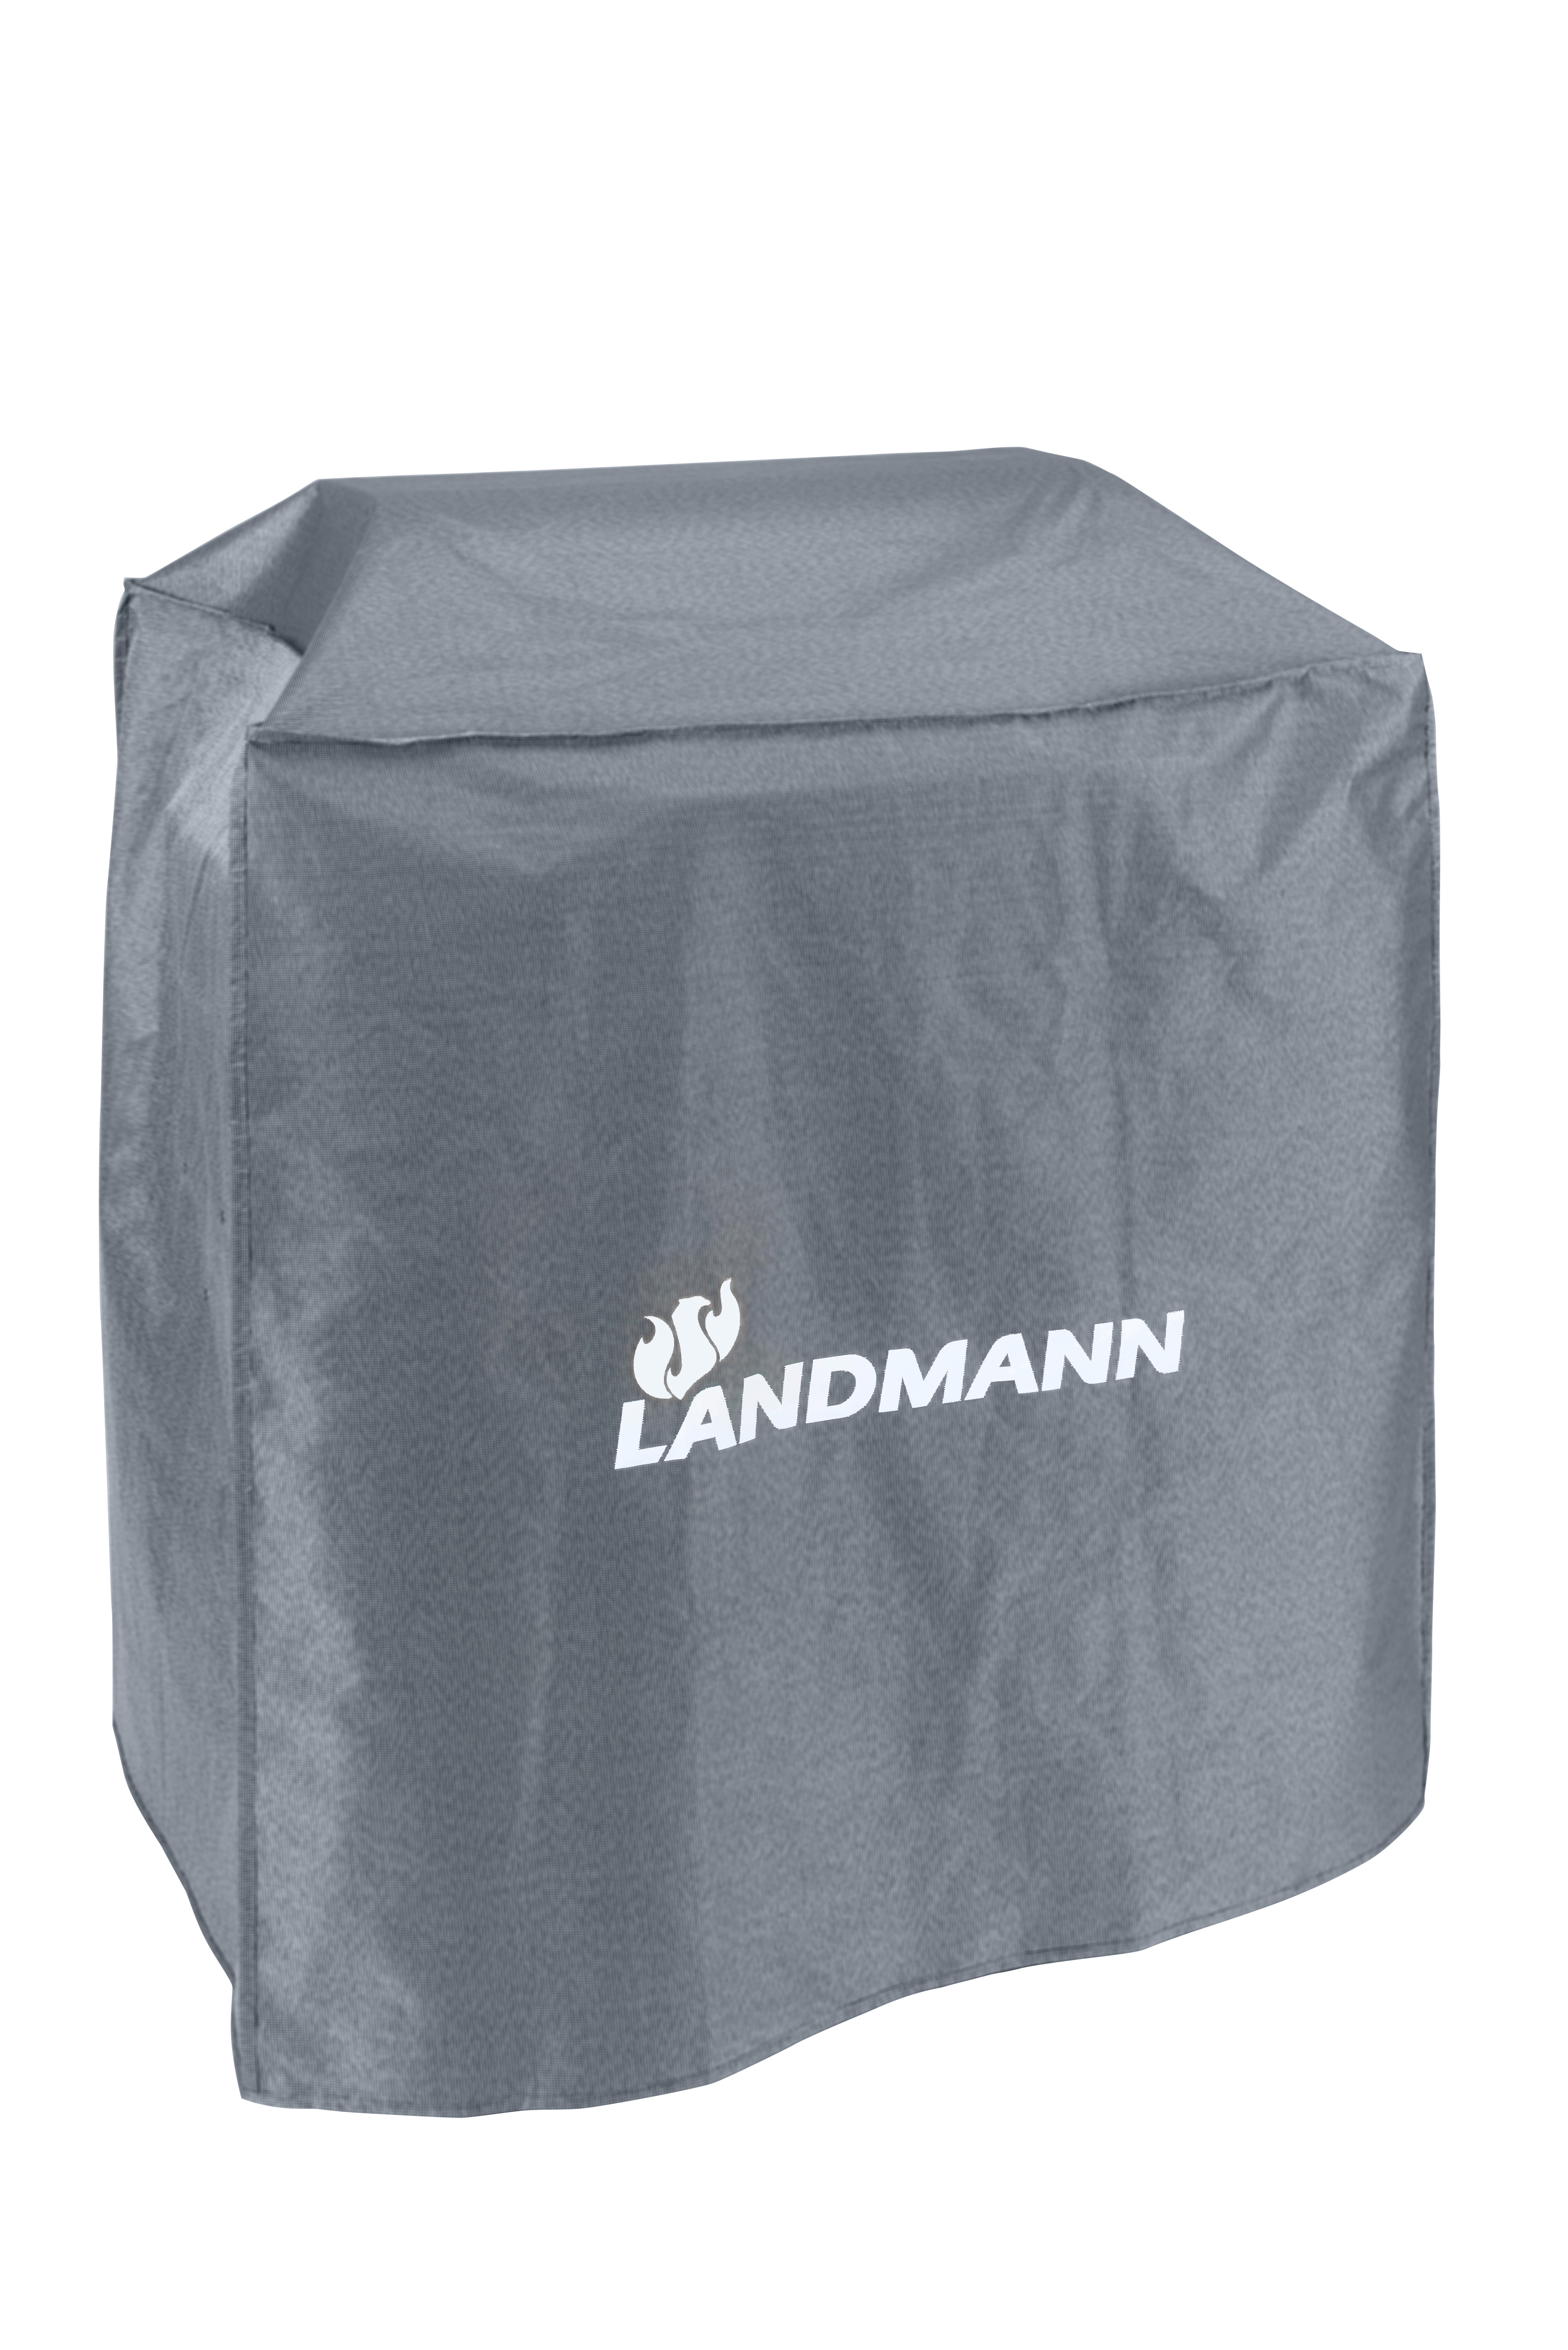 Landmann Triton 30 Cover